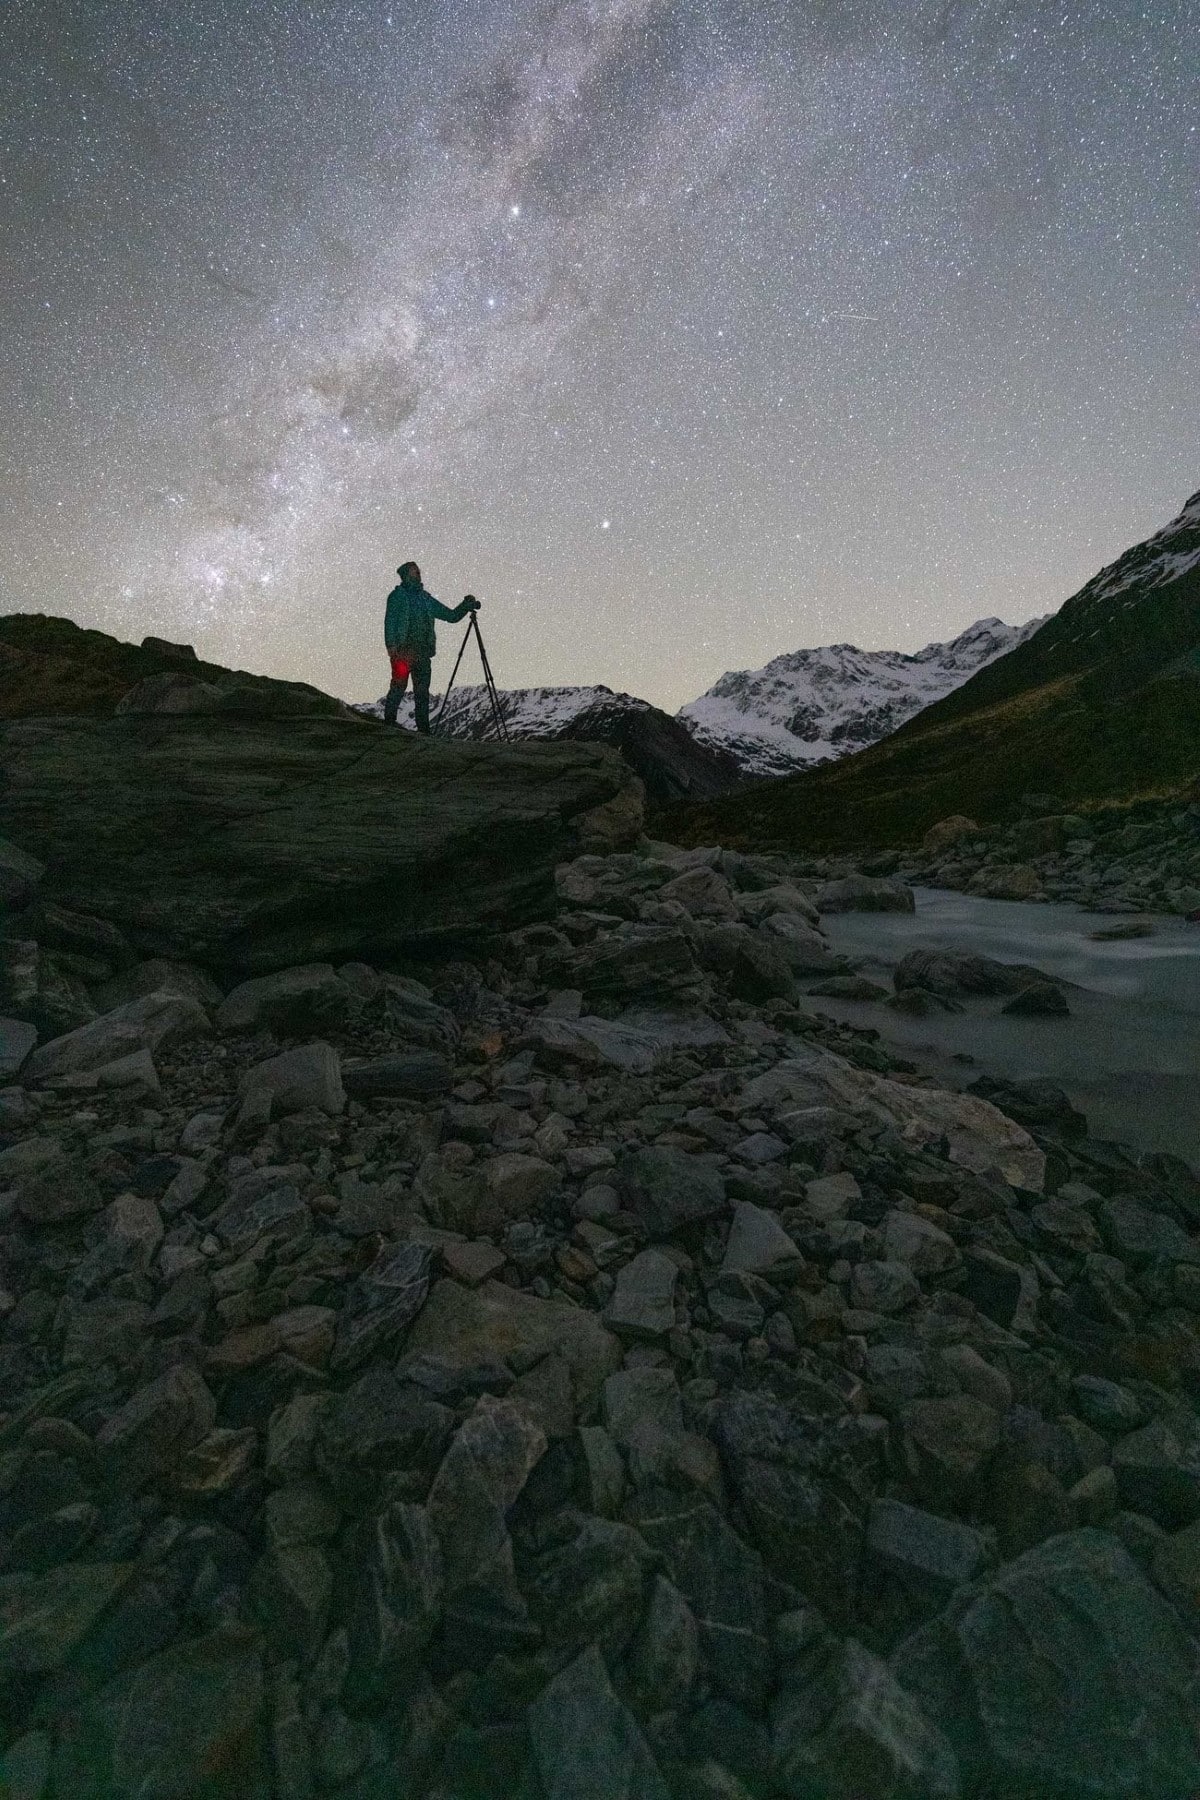 Dan Zafra doing astrophotography in New Zealand